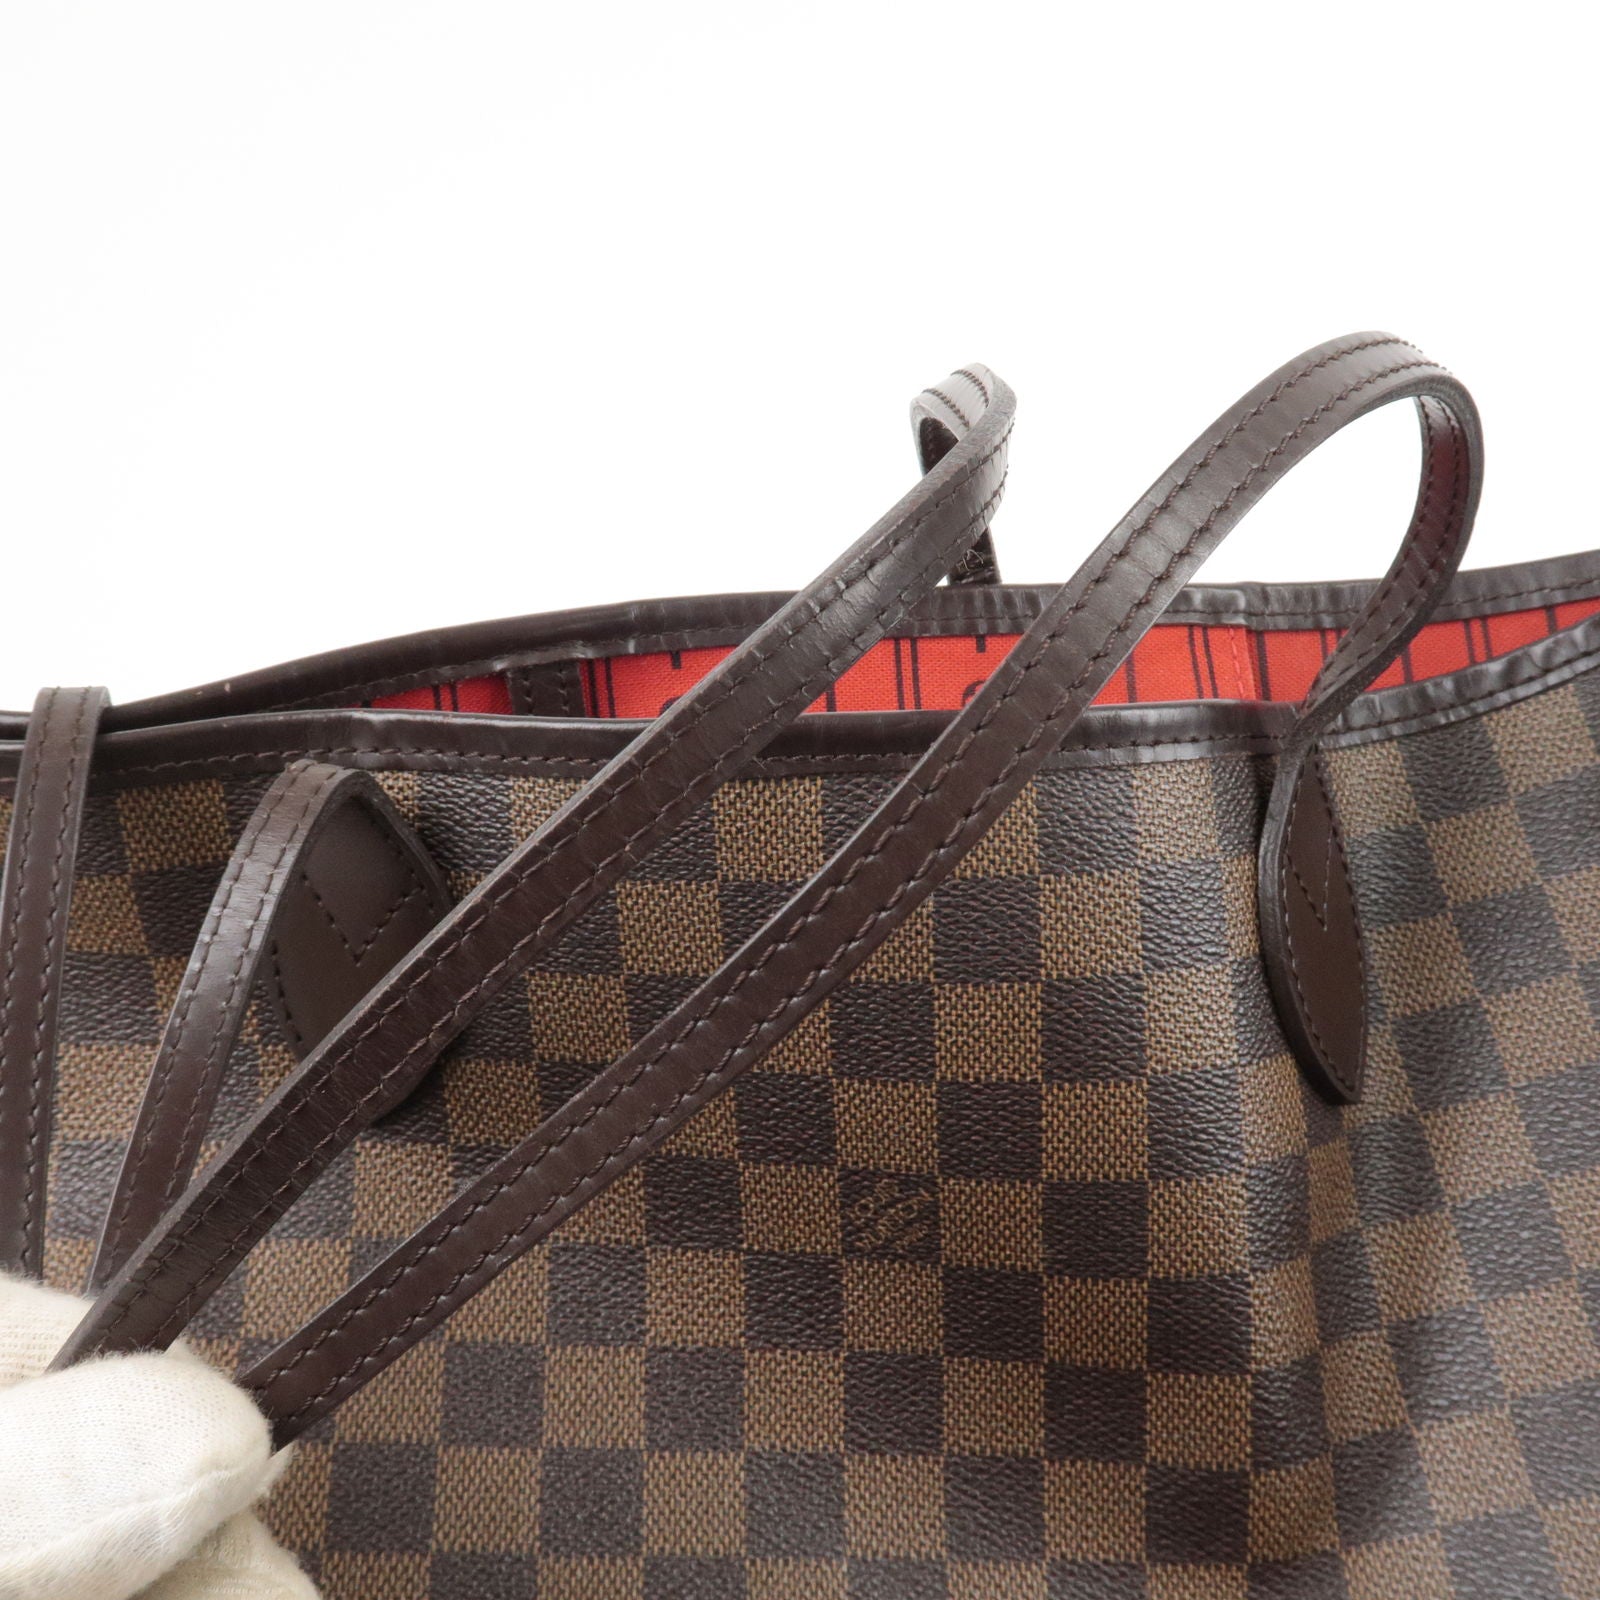 Louis Vuitton Neverfull MM Damier Azur Bags Handbags Purse (Beige) :  : Shoes & Handbags